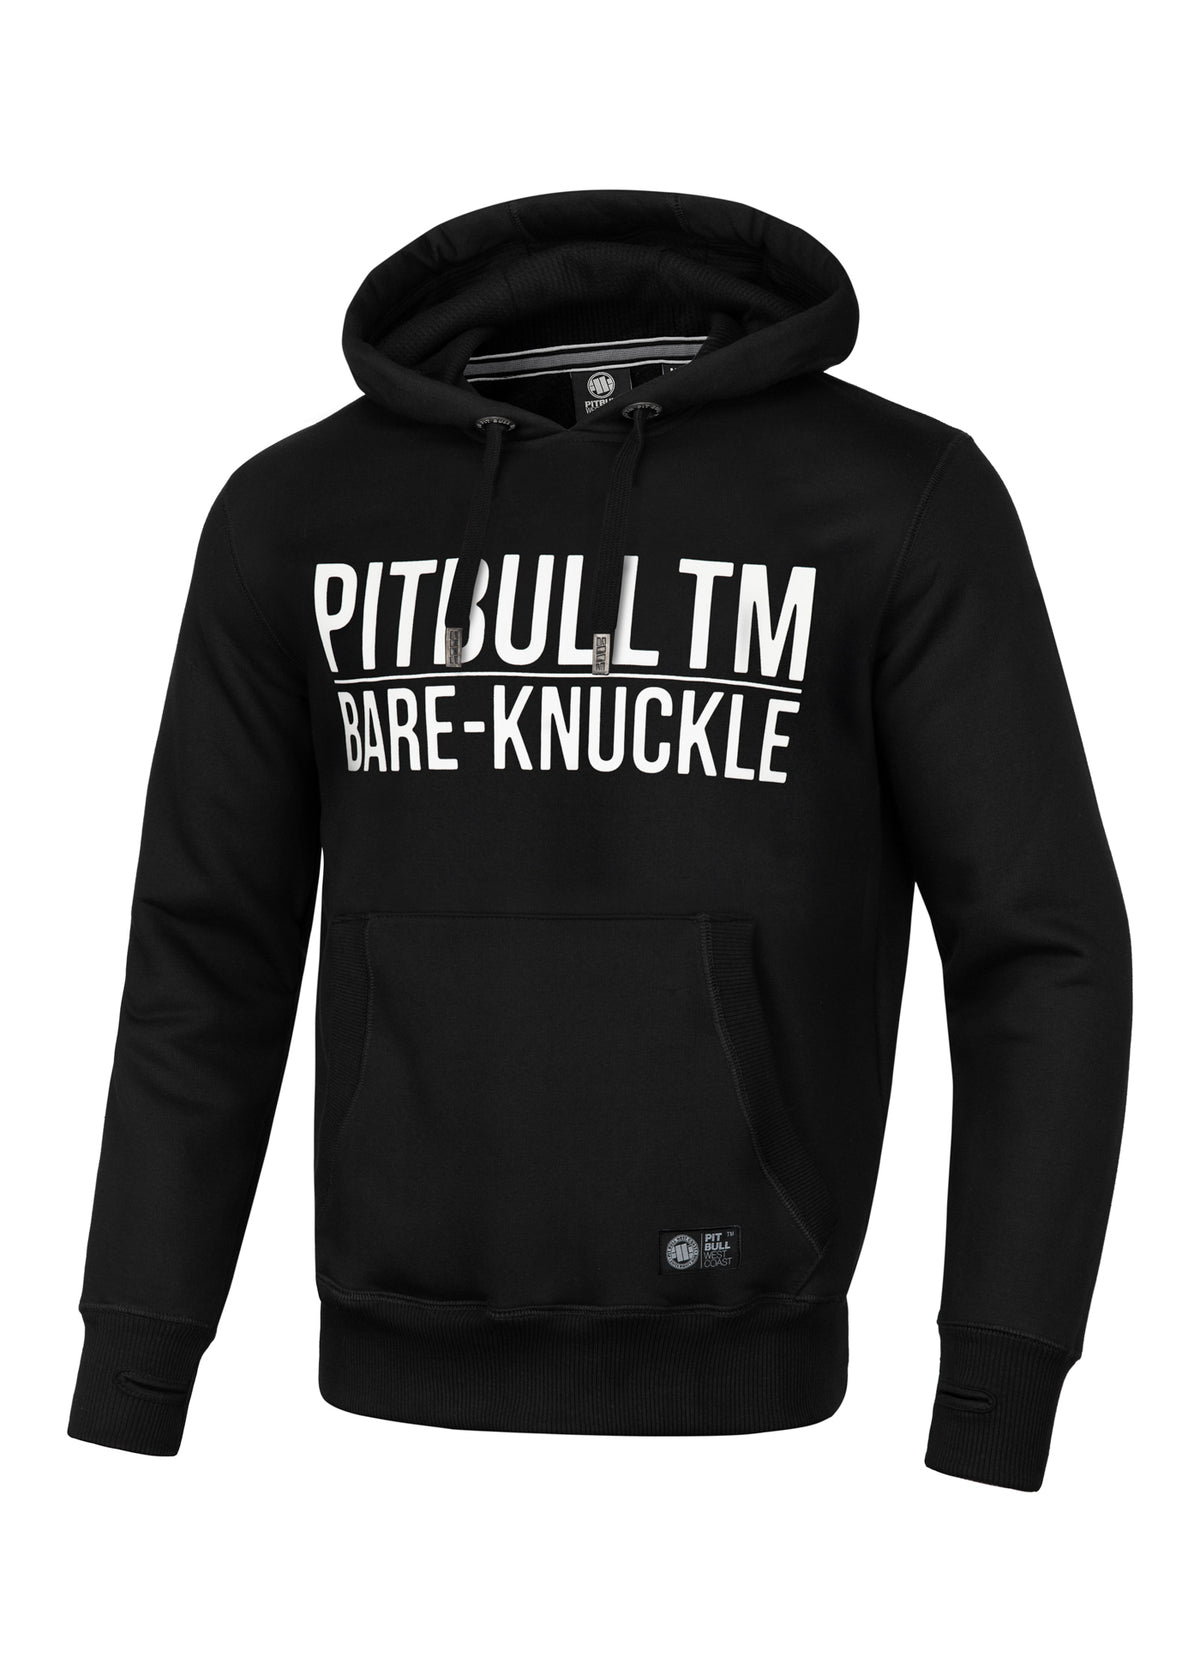 BARE KNUCKLE Black Hoodie - Pitbullstore.eu